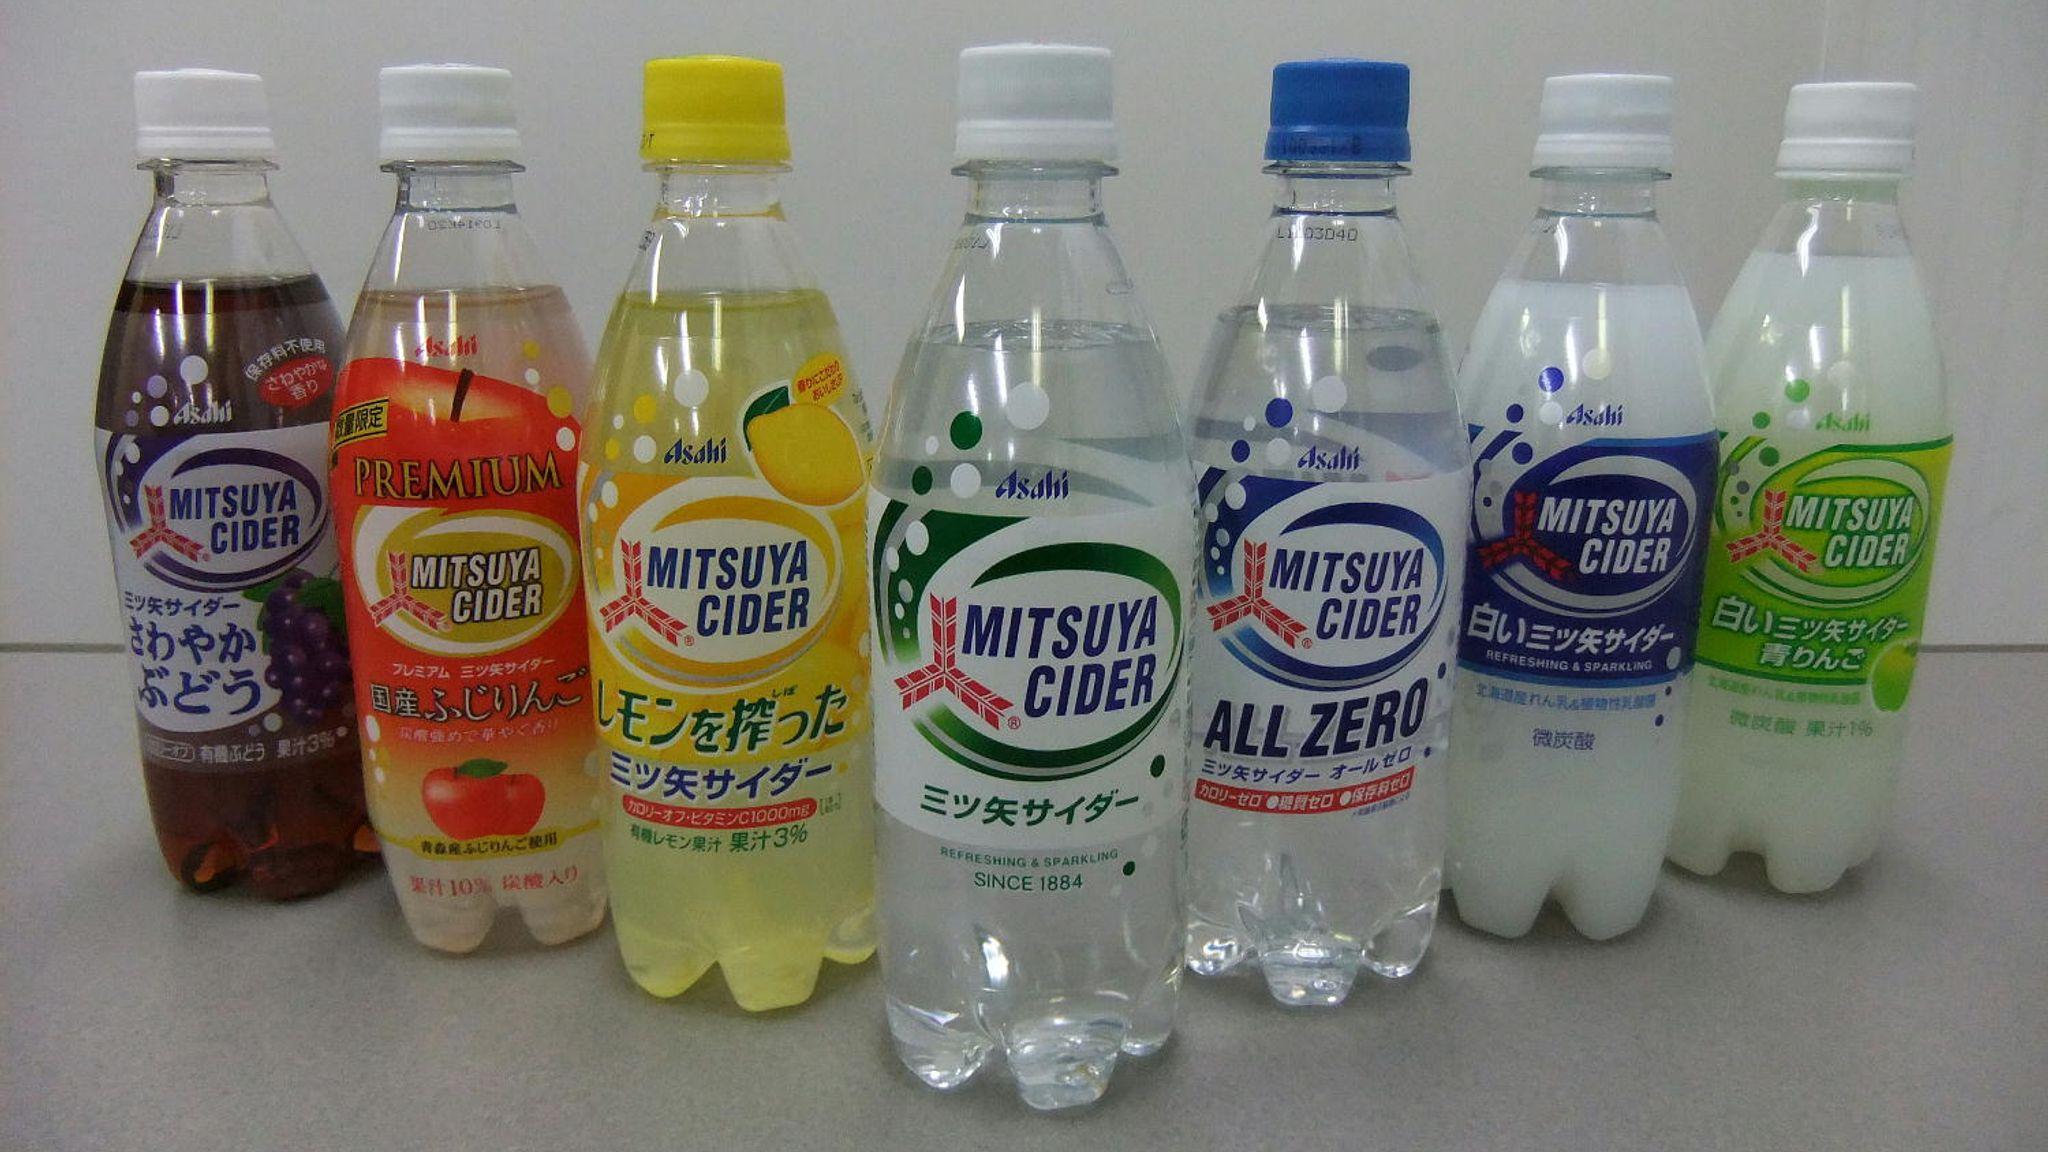 7 different flavors of Mitsuya Cider